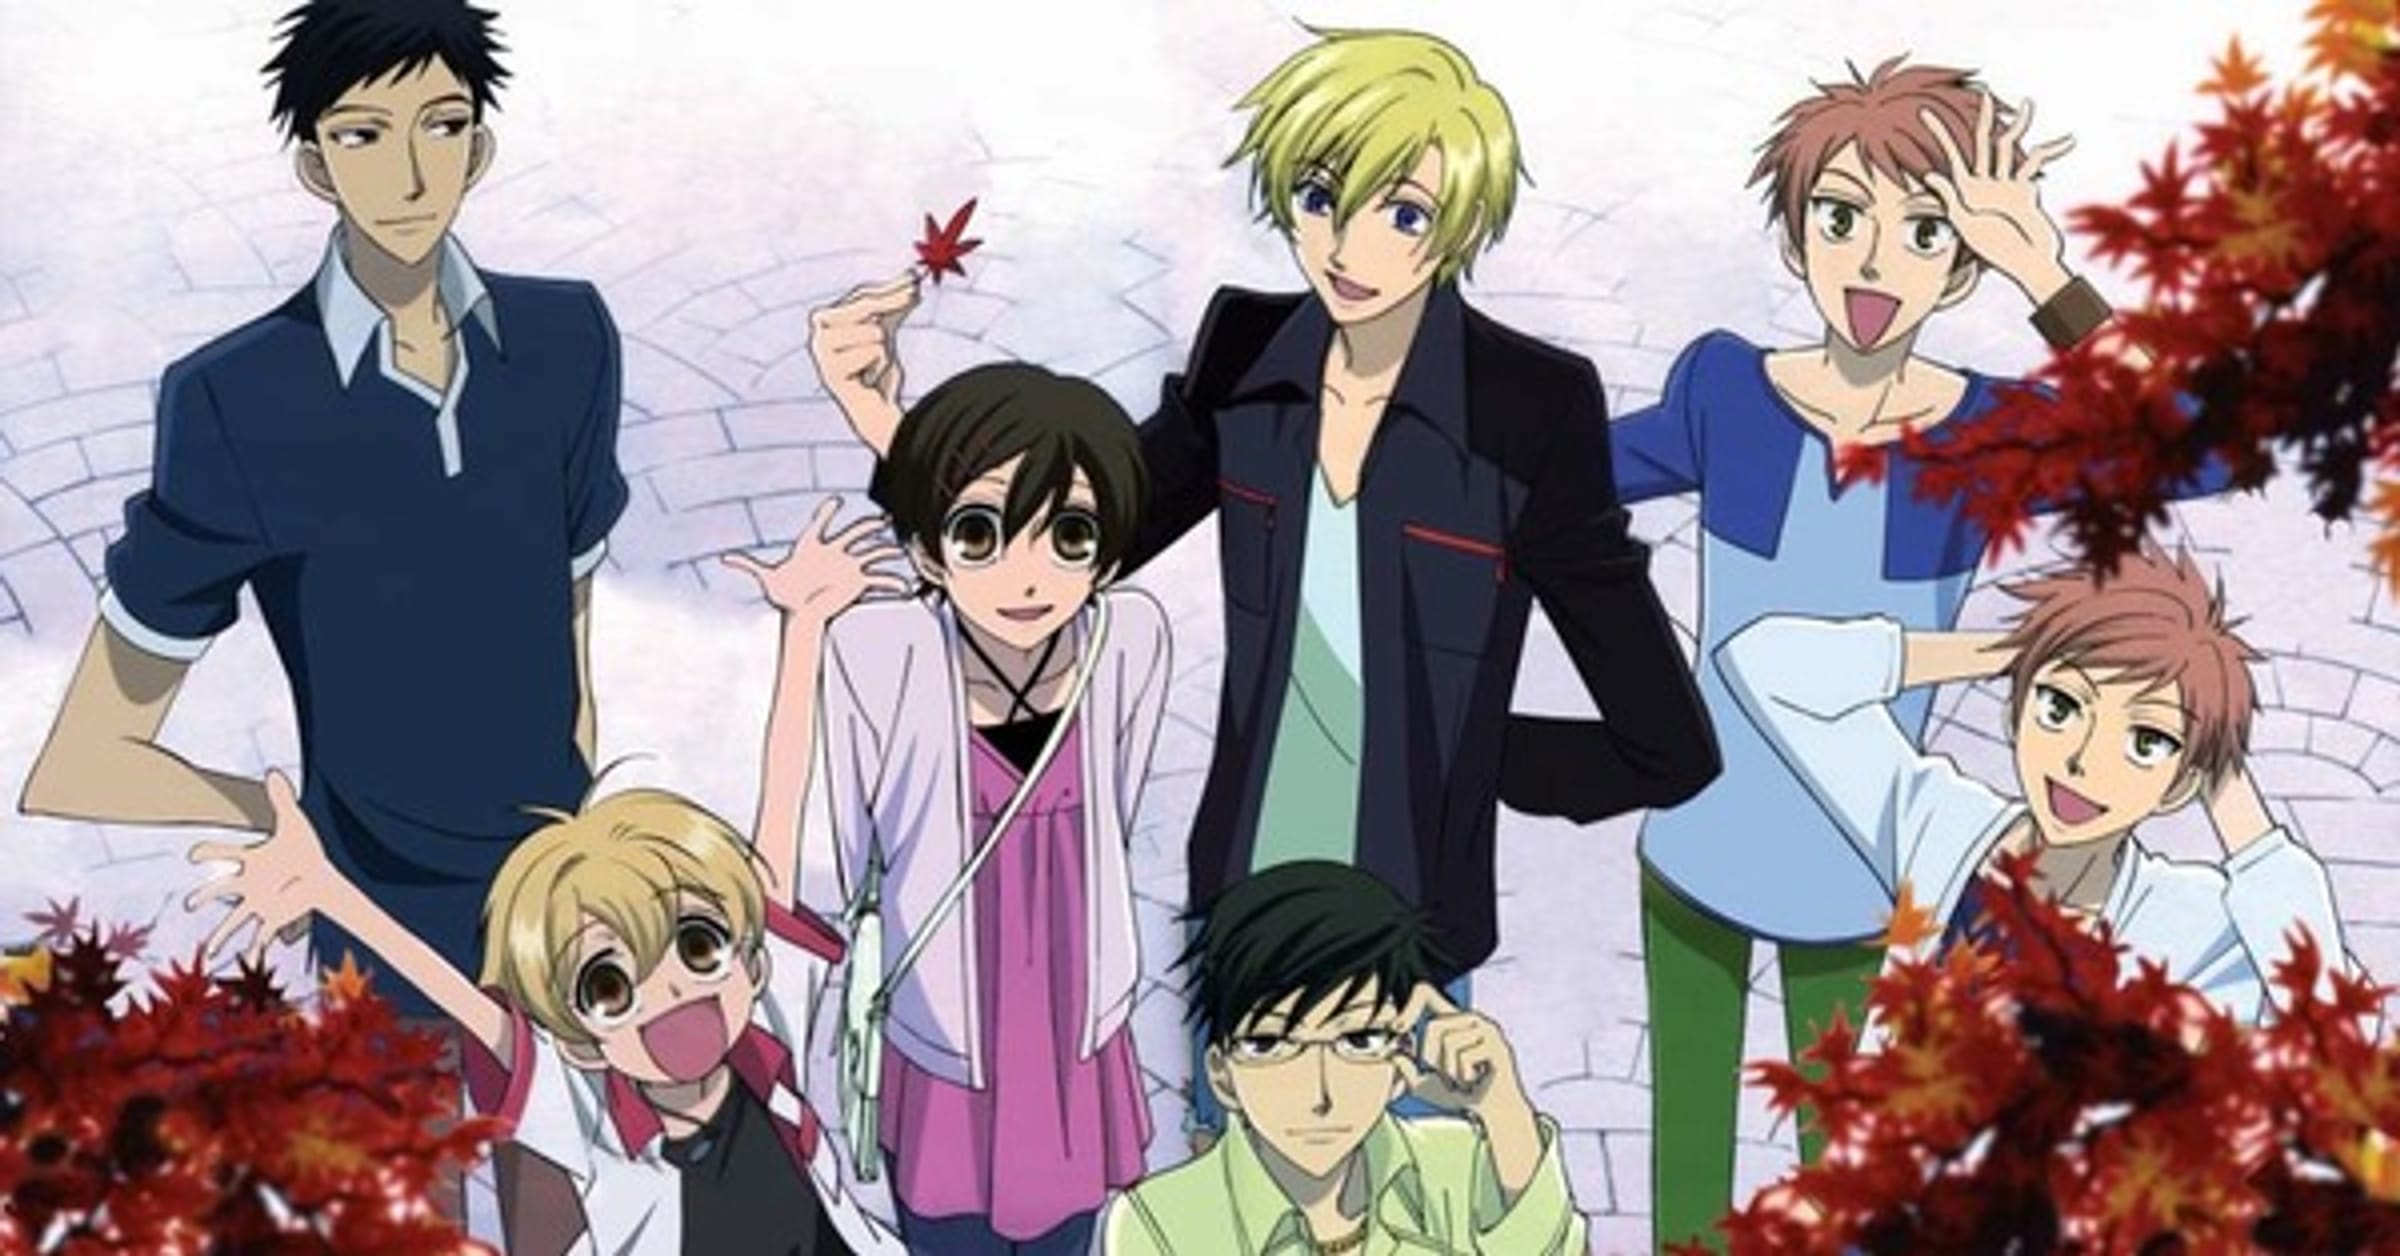 Assistir Ouran High School Host Club Todos os Episódios Online - Animes BR